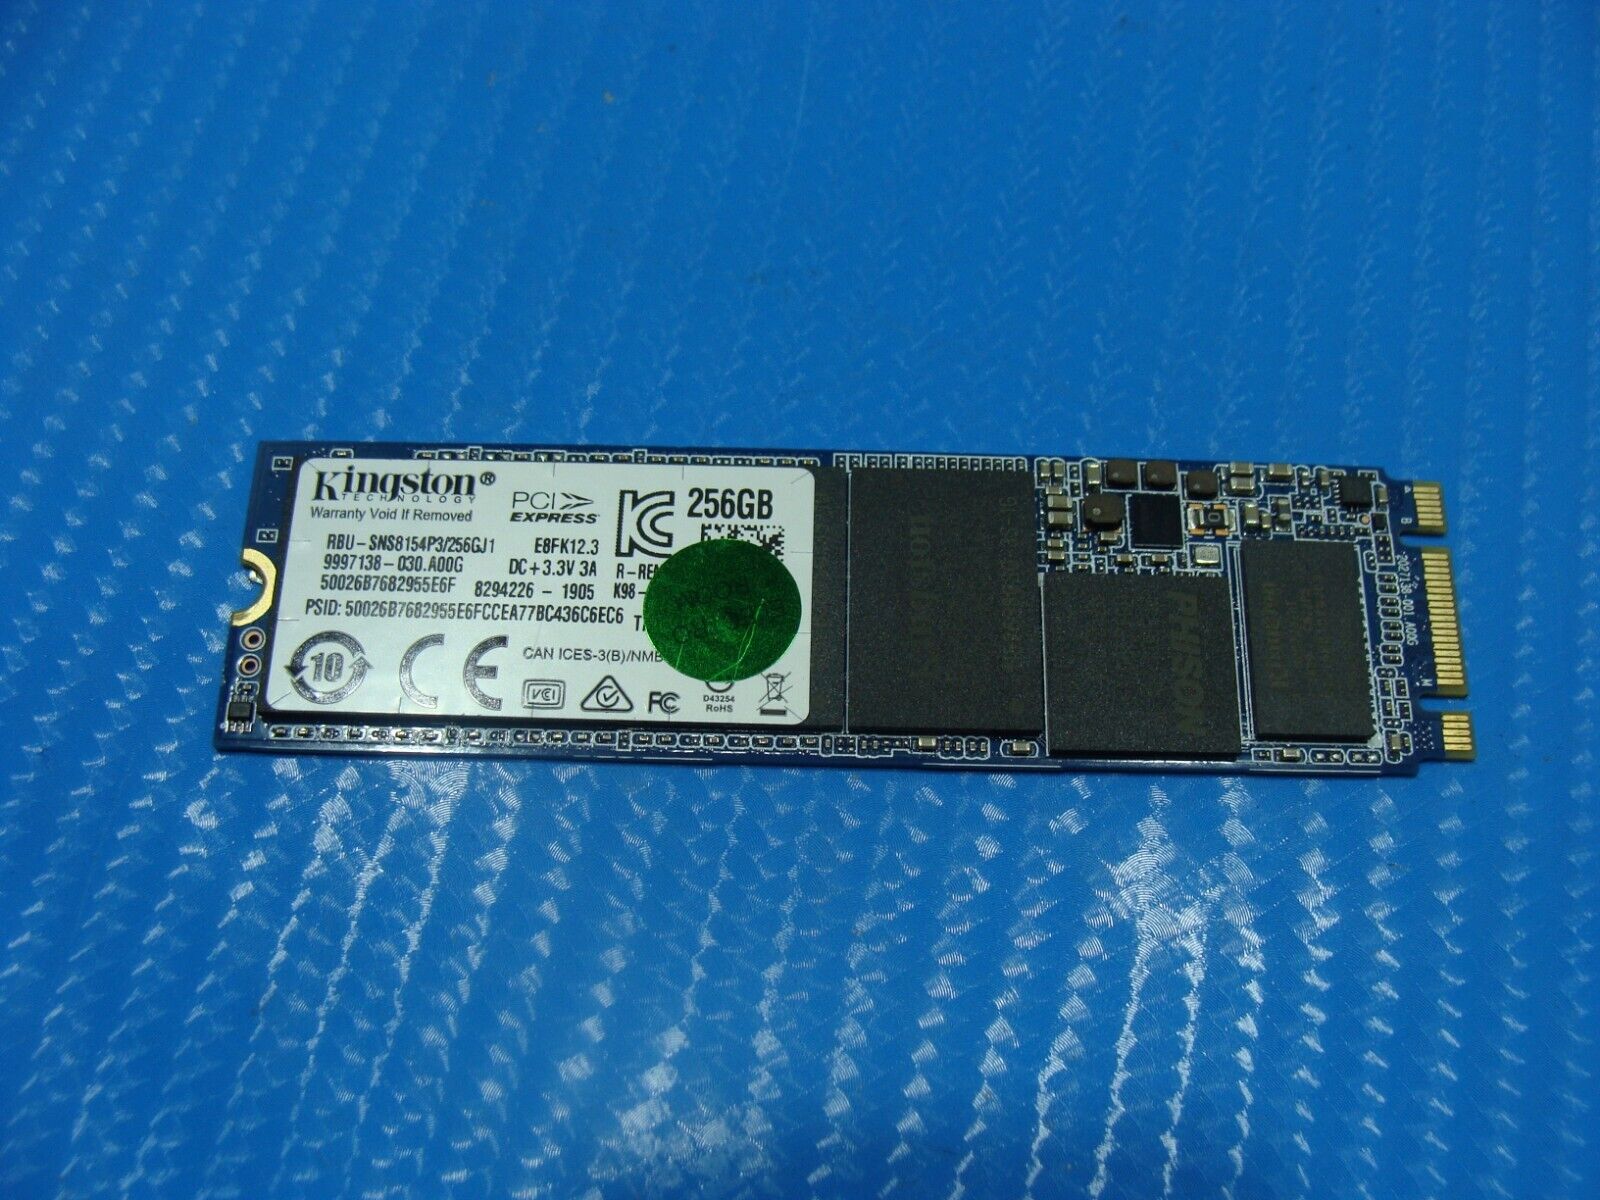 Acer SP314-53GN-52GR Kingston 256GB SATA M.2 SSD RBU-SNS8154P3/256GJ1